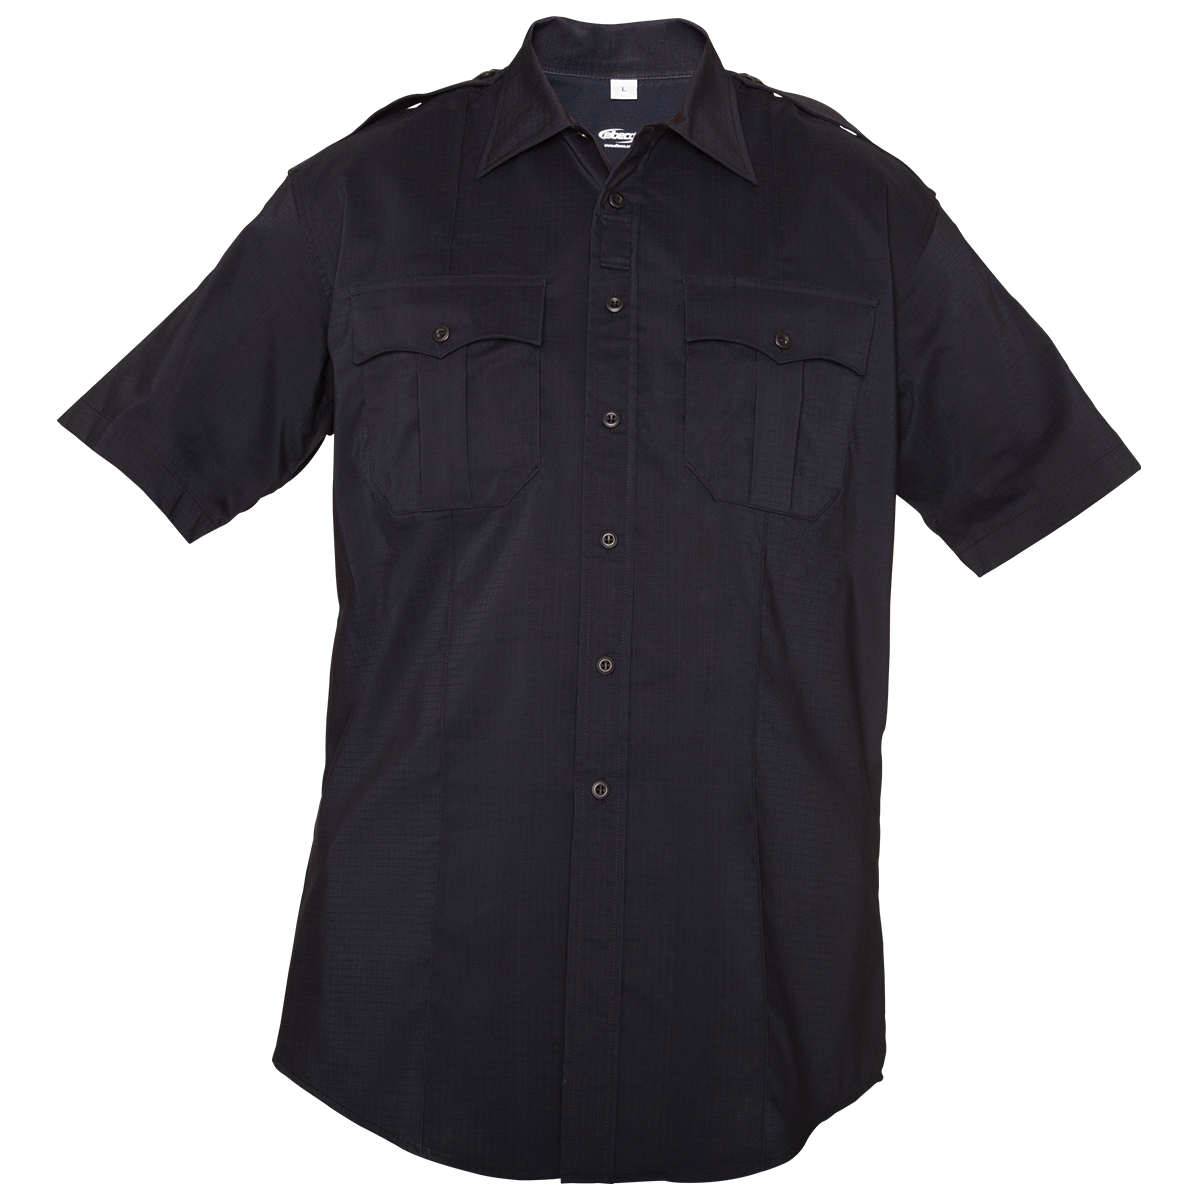 Elbeco Reflex™ Short Sleeve Stretch RipStop Shirt